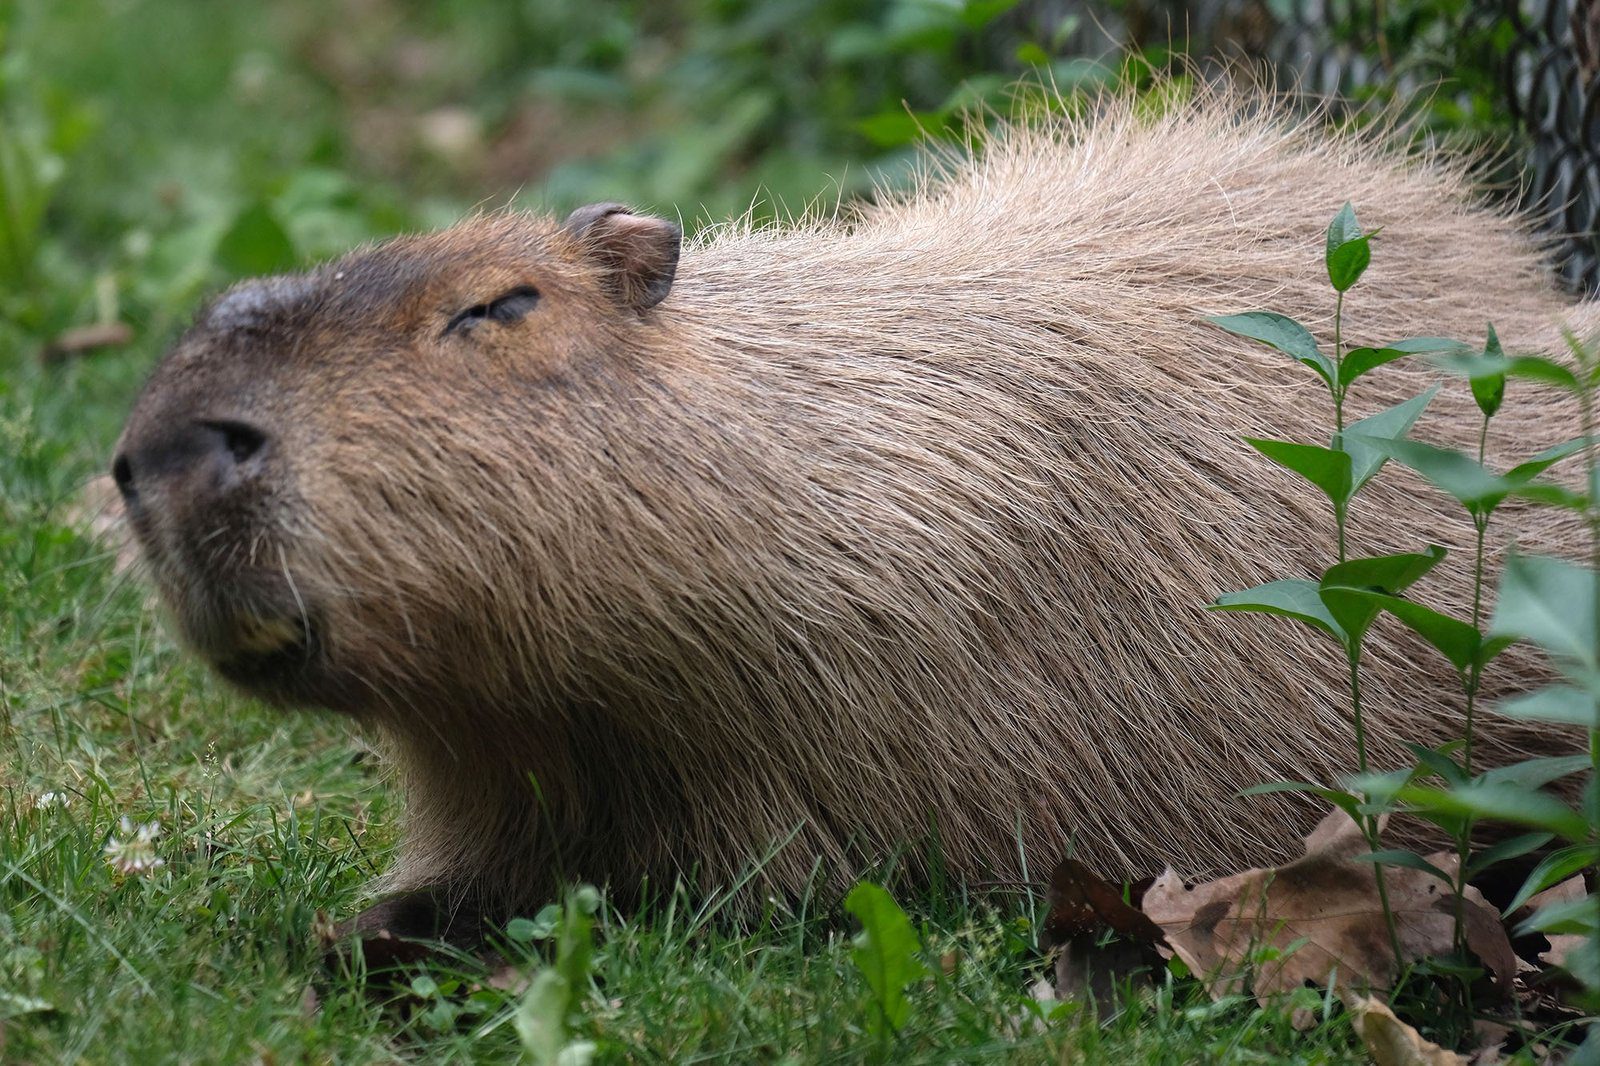 The Biggest Capybara Ever Documented